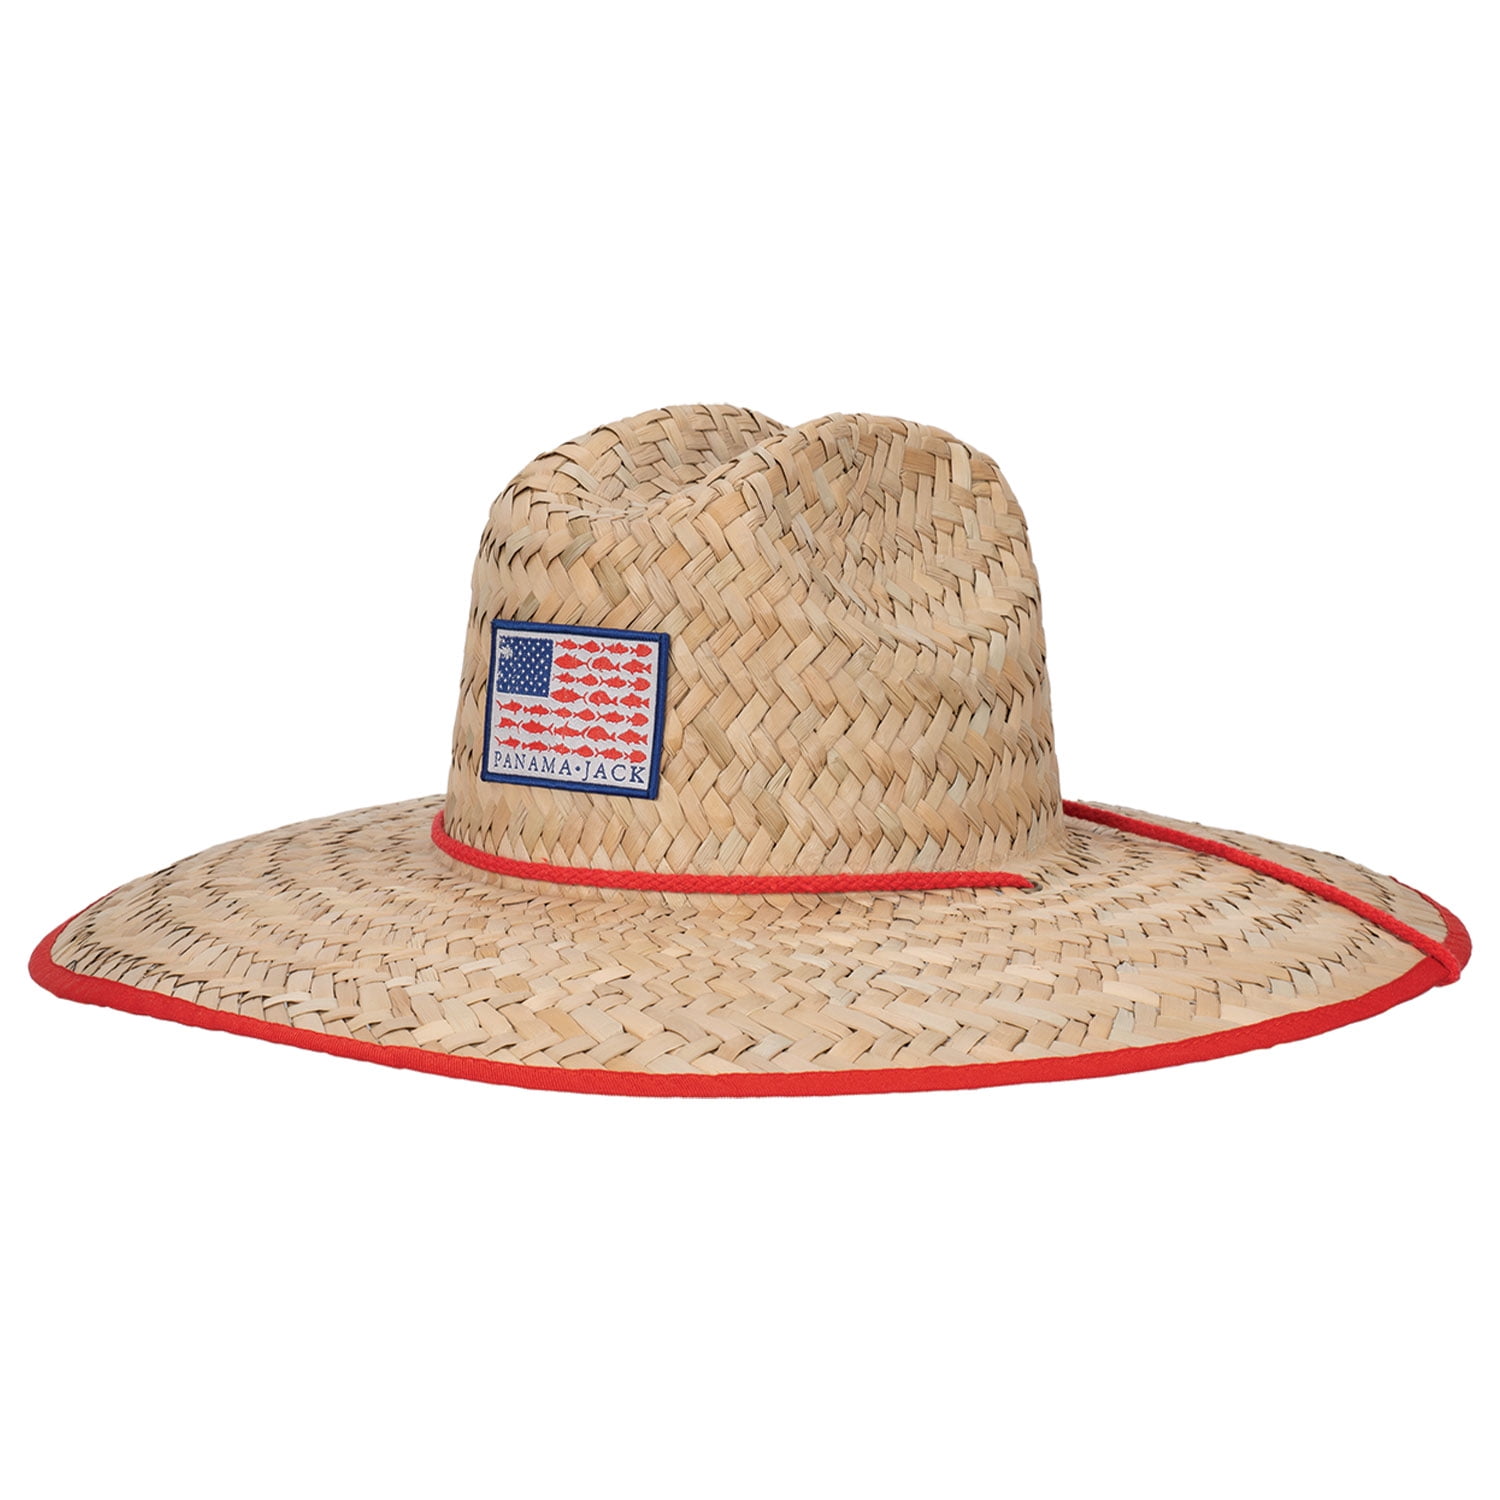 Panama Jack Straw Sun Hat - Fish Flag Lifeguard, Adjustable Chin Cord, Inner Elasticized Sweatband, 5 1/4 Big Brim (Red, Large/X-Large)